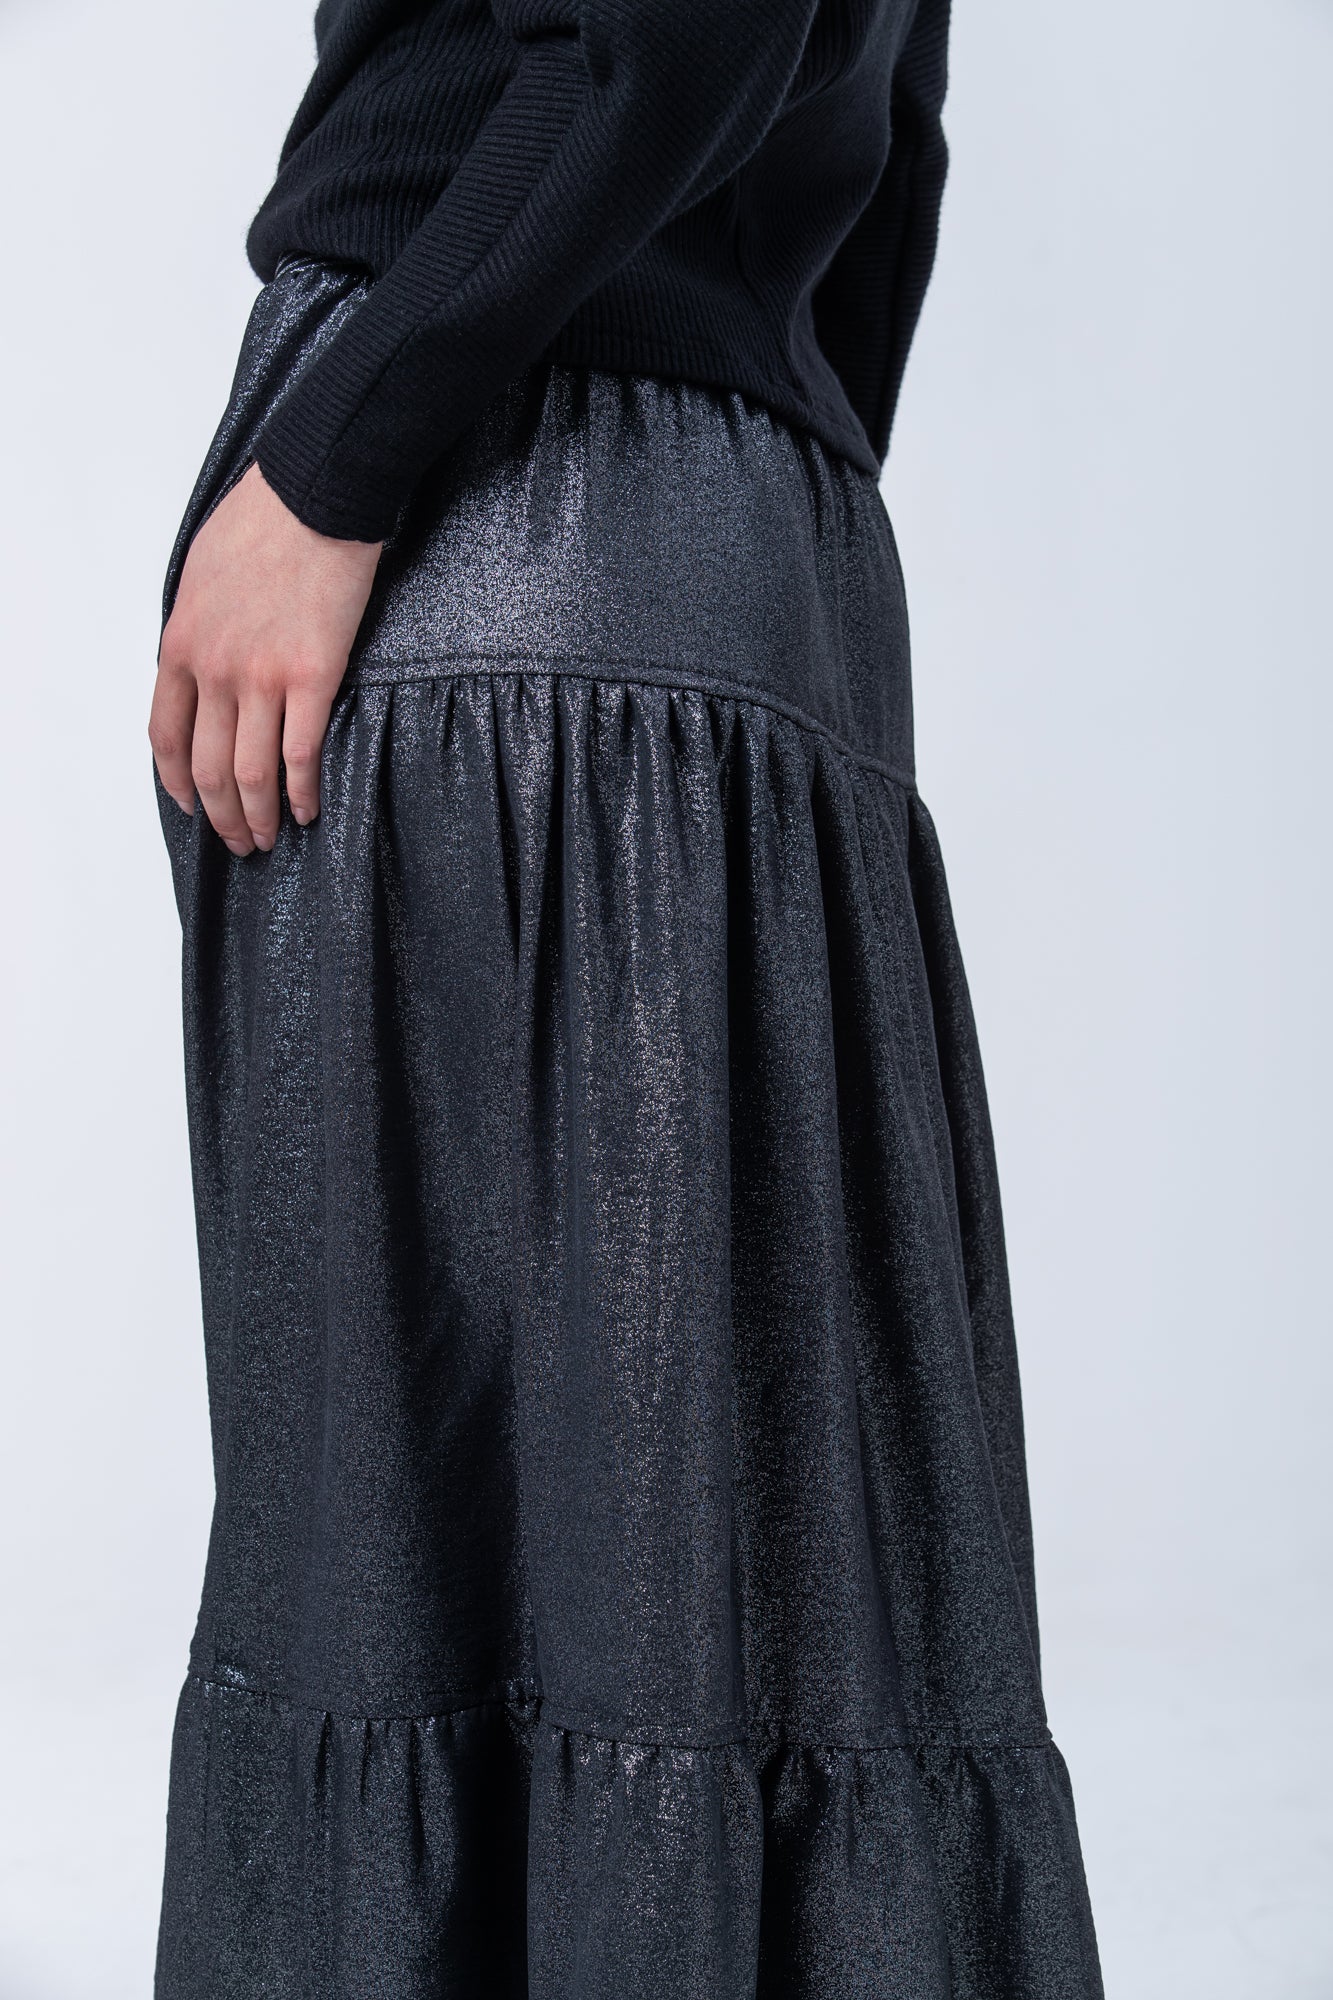 Marbella Tiered Skirt - Black/Silver